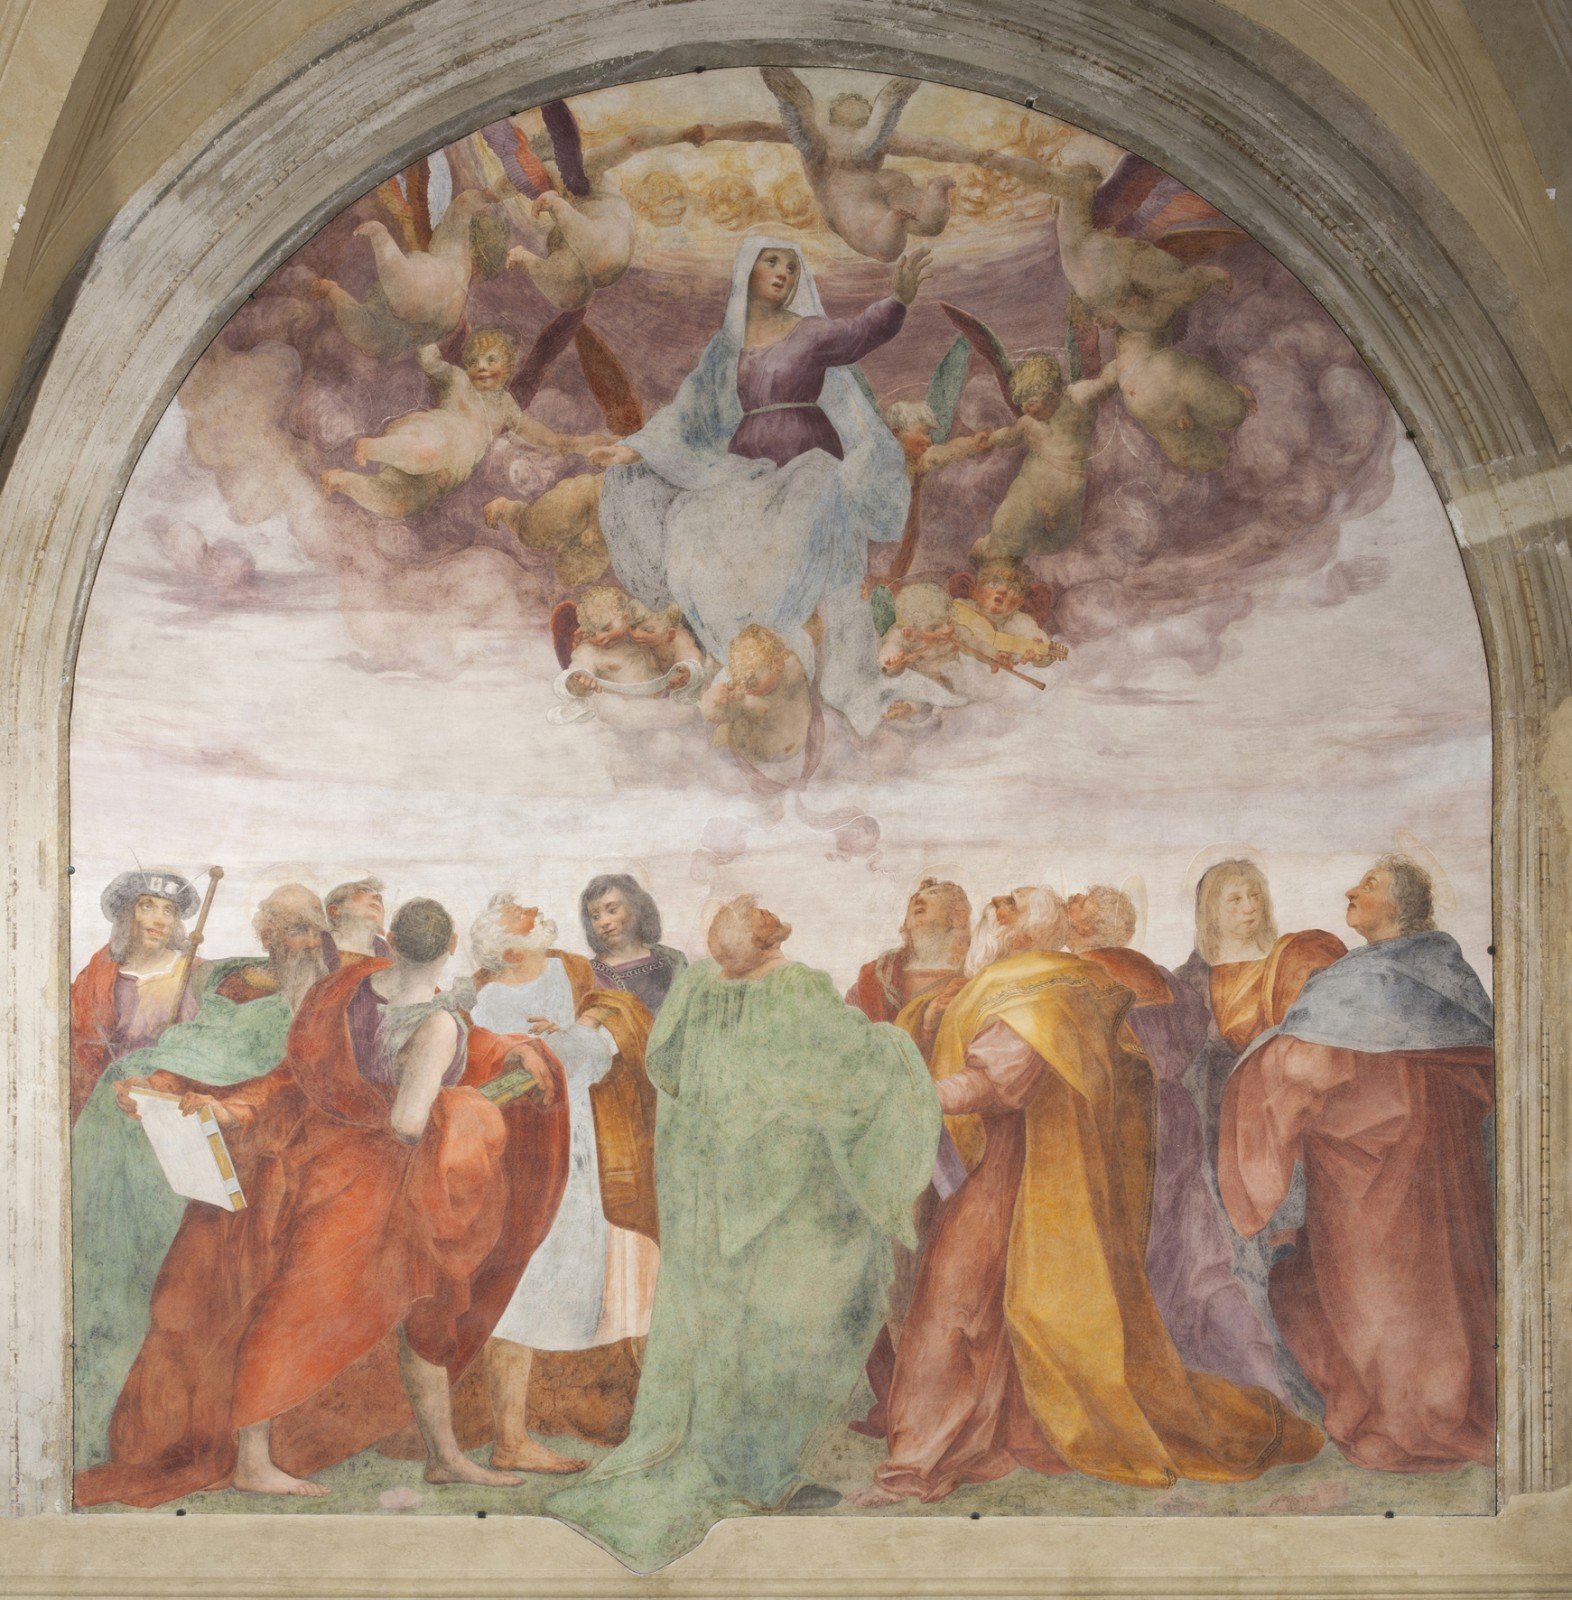 Pontormo (Jacopo Carucci; Pontorme, Empoli 1494 - Florence 1557), "The Visitation", 1514-1516, fresco, 408 x 338 cm. Florence, Basilica of the Santissima Annunziata cloister of the votes.